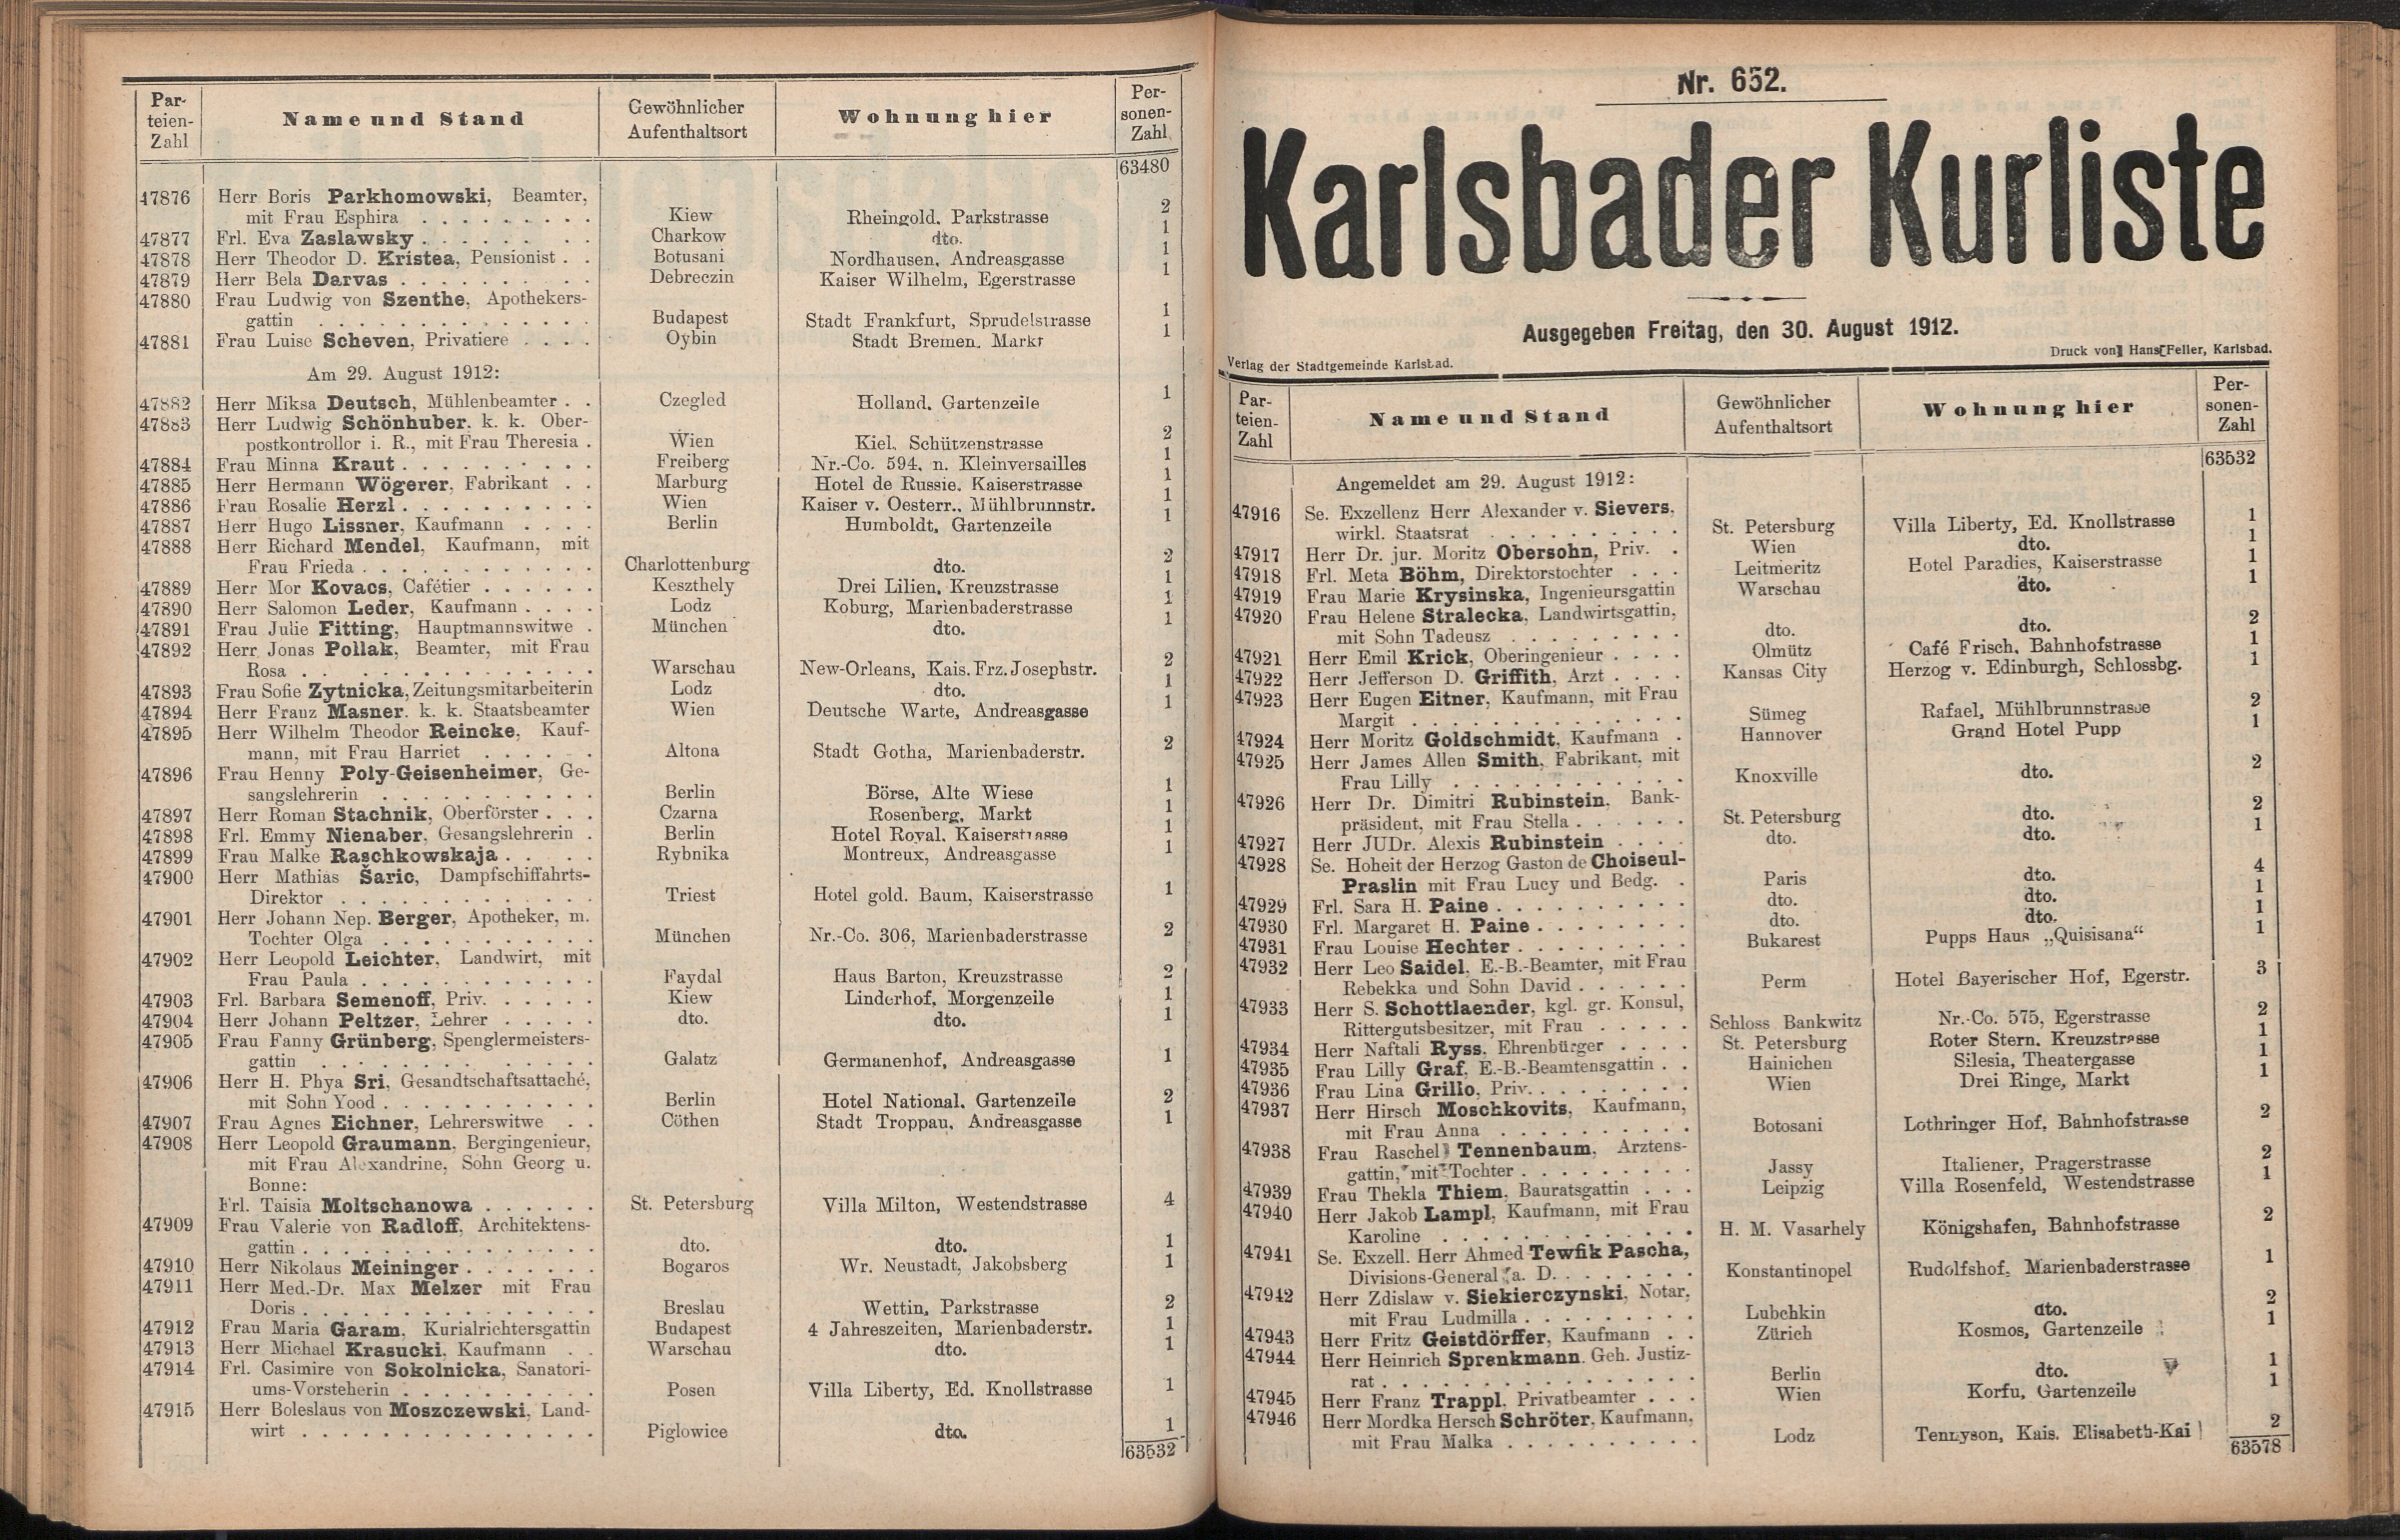 370. soap-kv_knihovna_karlsbader-kurliste-1912-2_3700